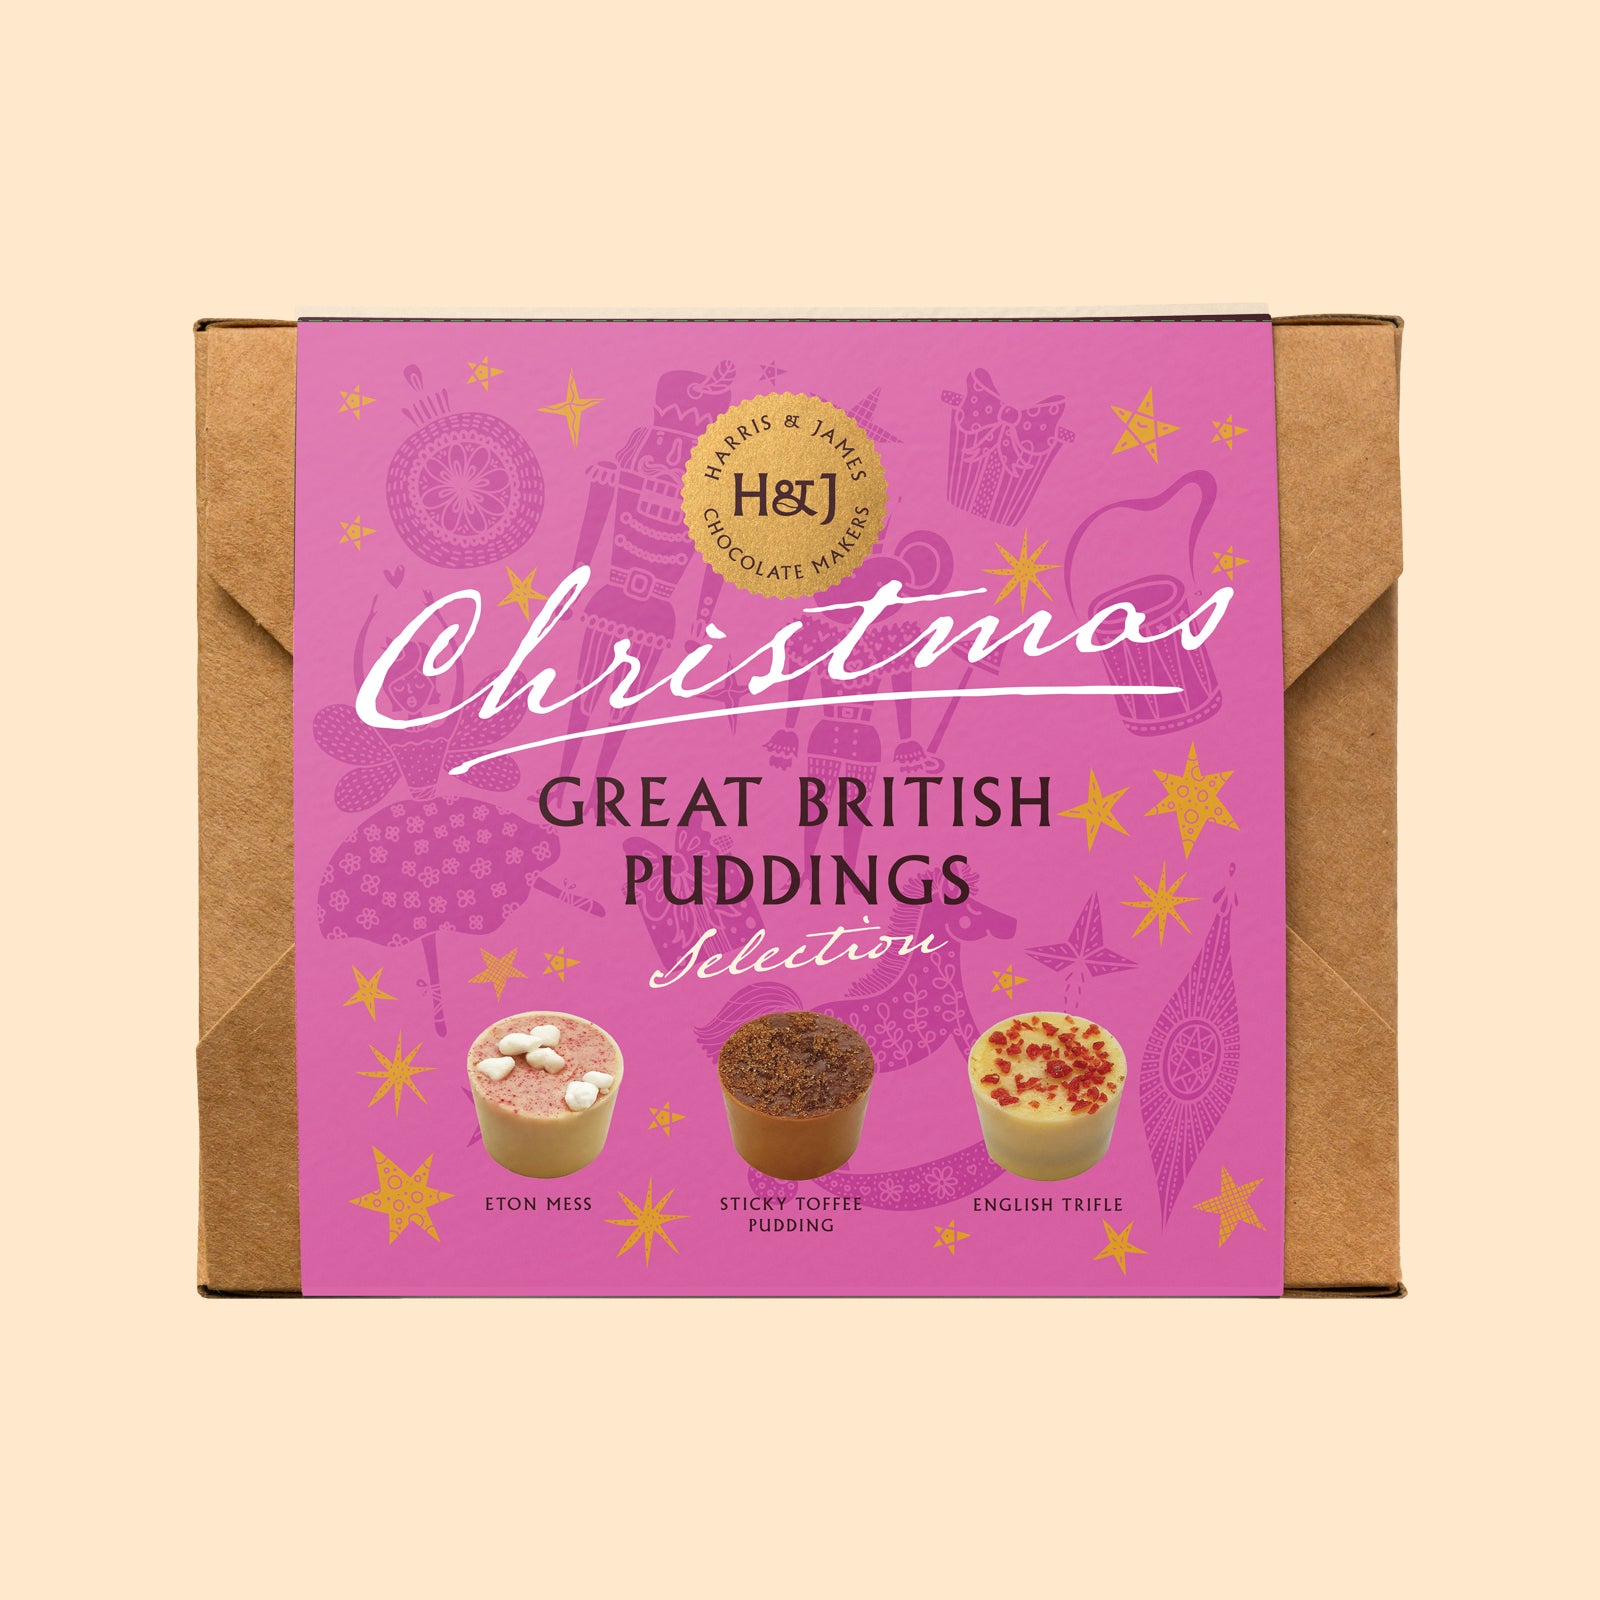 Harris & James - Great British Puddings Individual Chocolate Selection Box